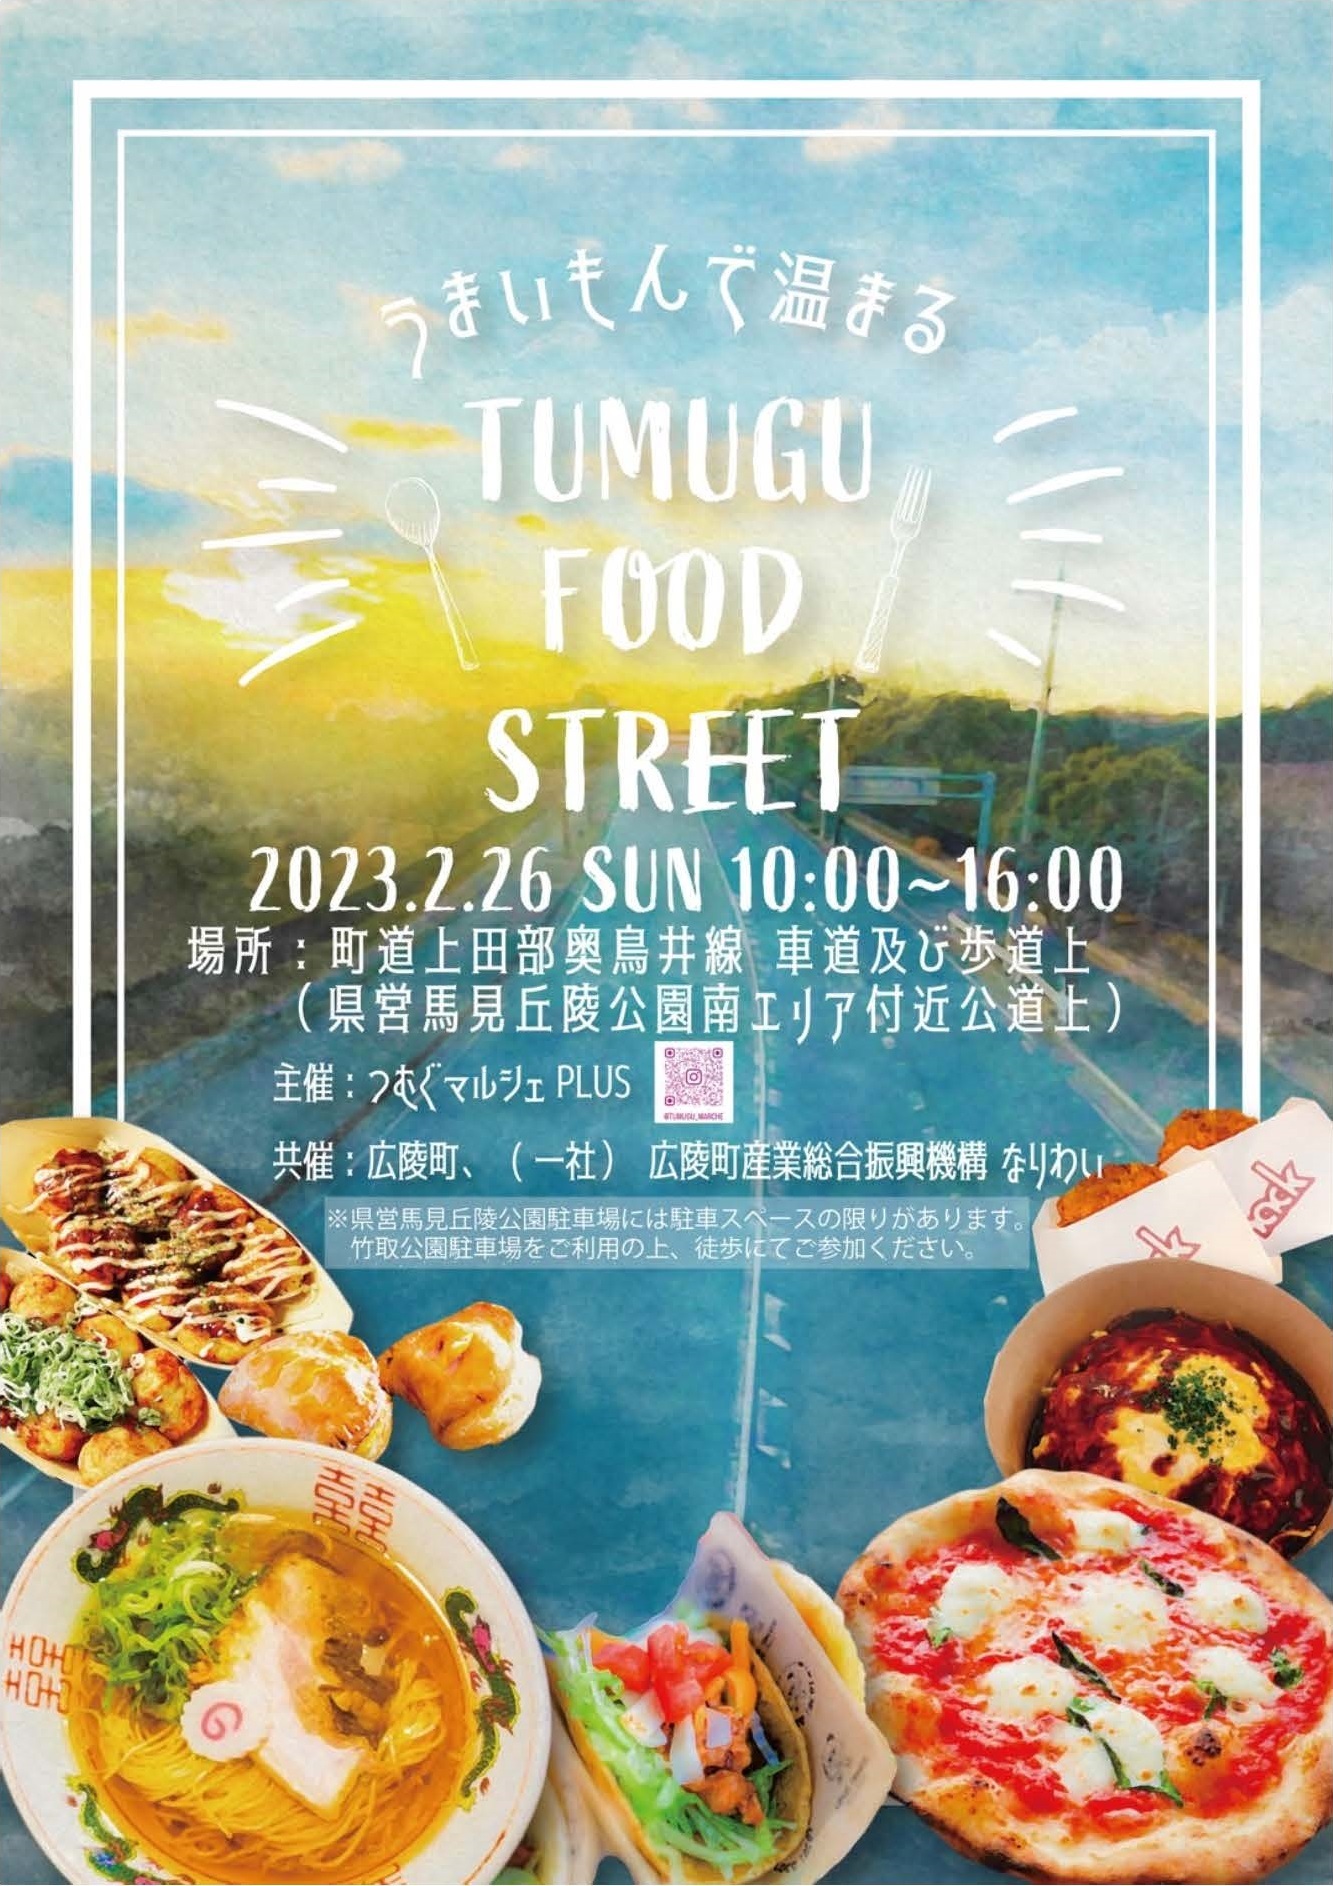 TUMUGU FOOD STREET